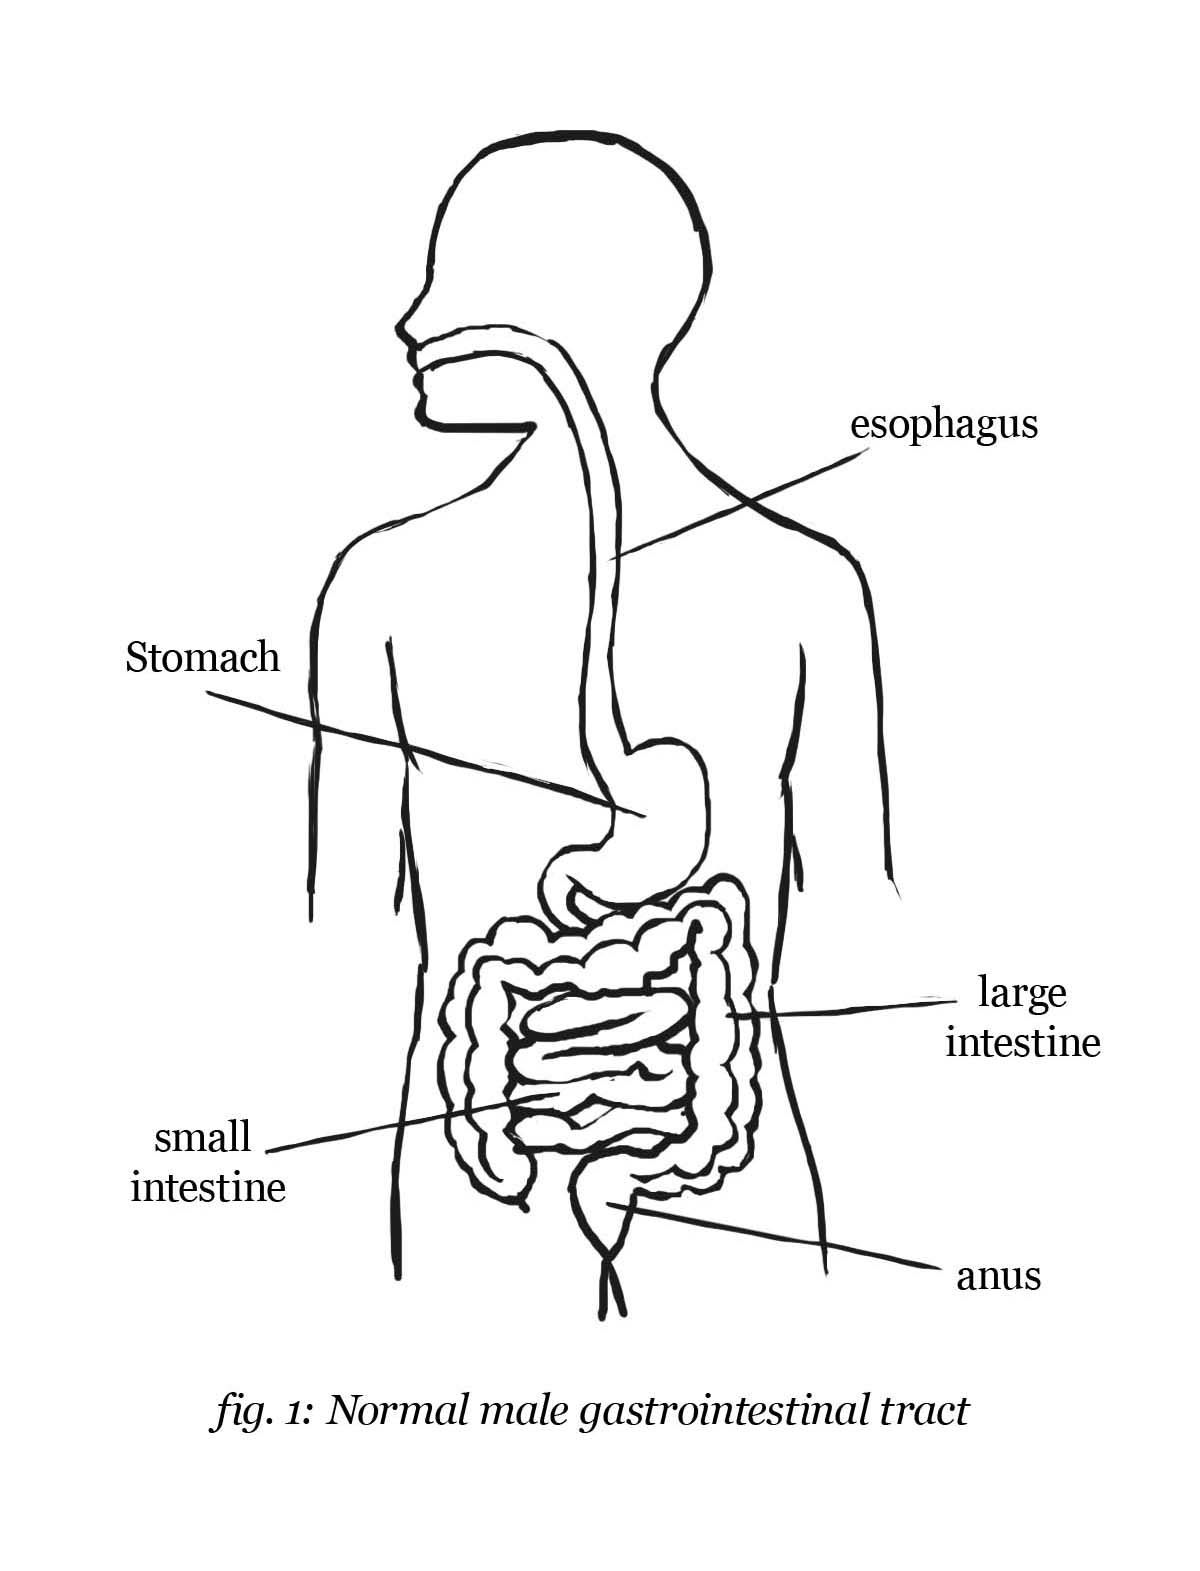 Human digestive system | Description, Parts, & Functions | Britannica